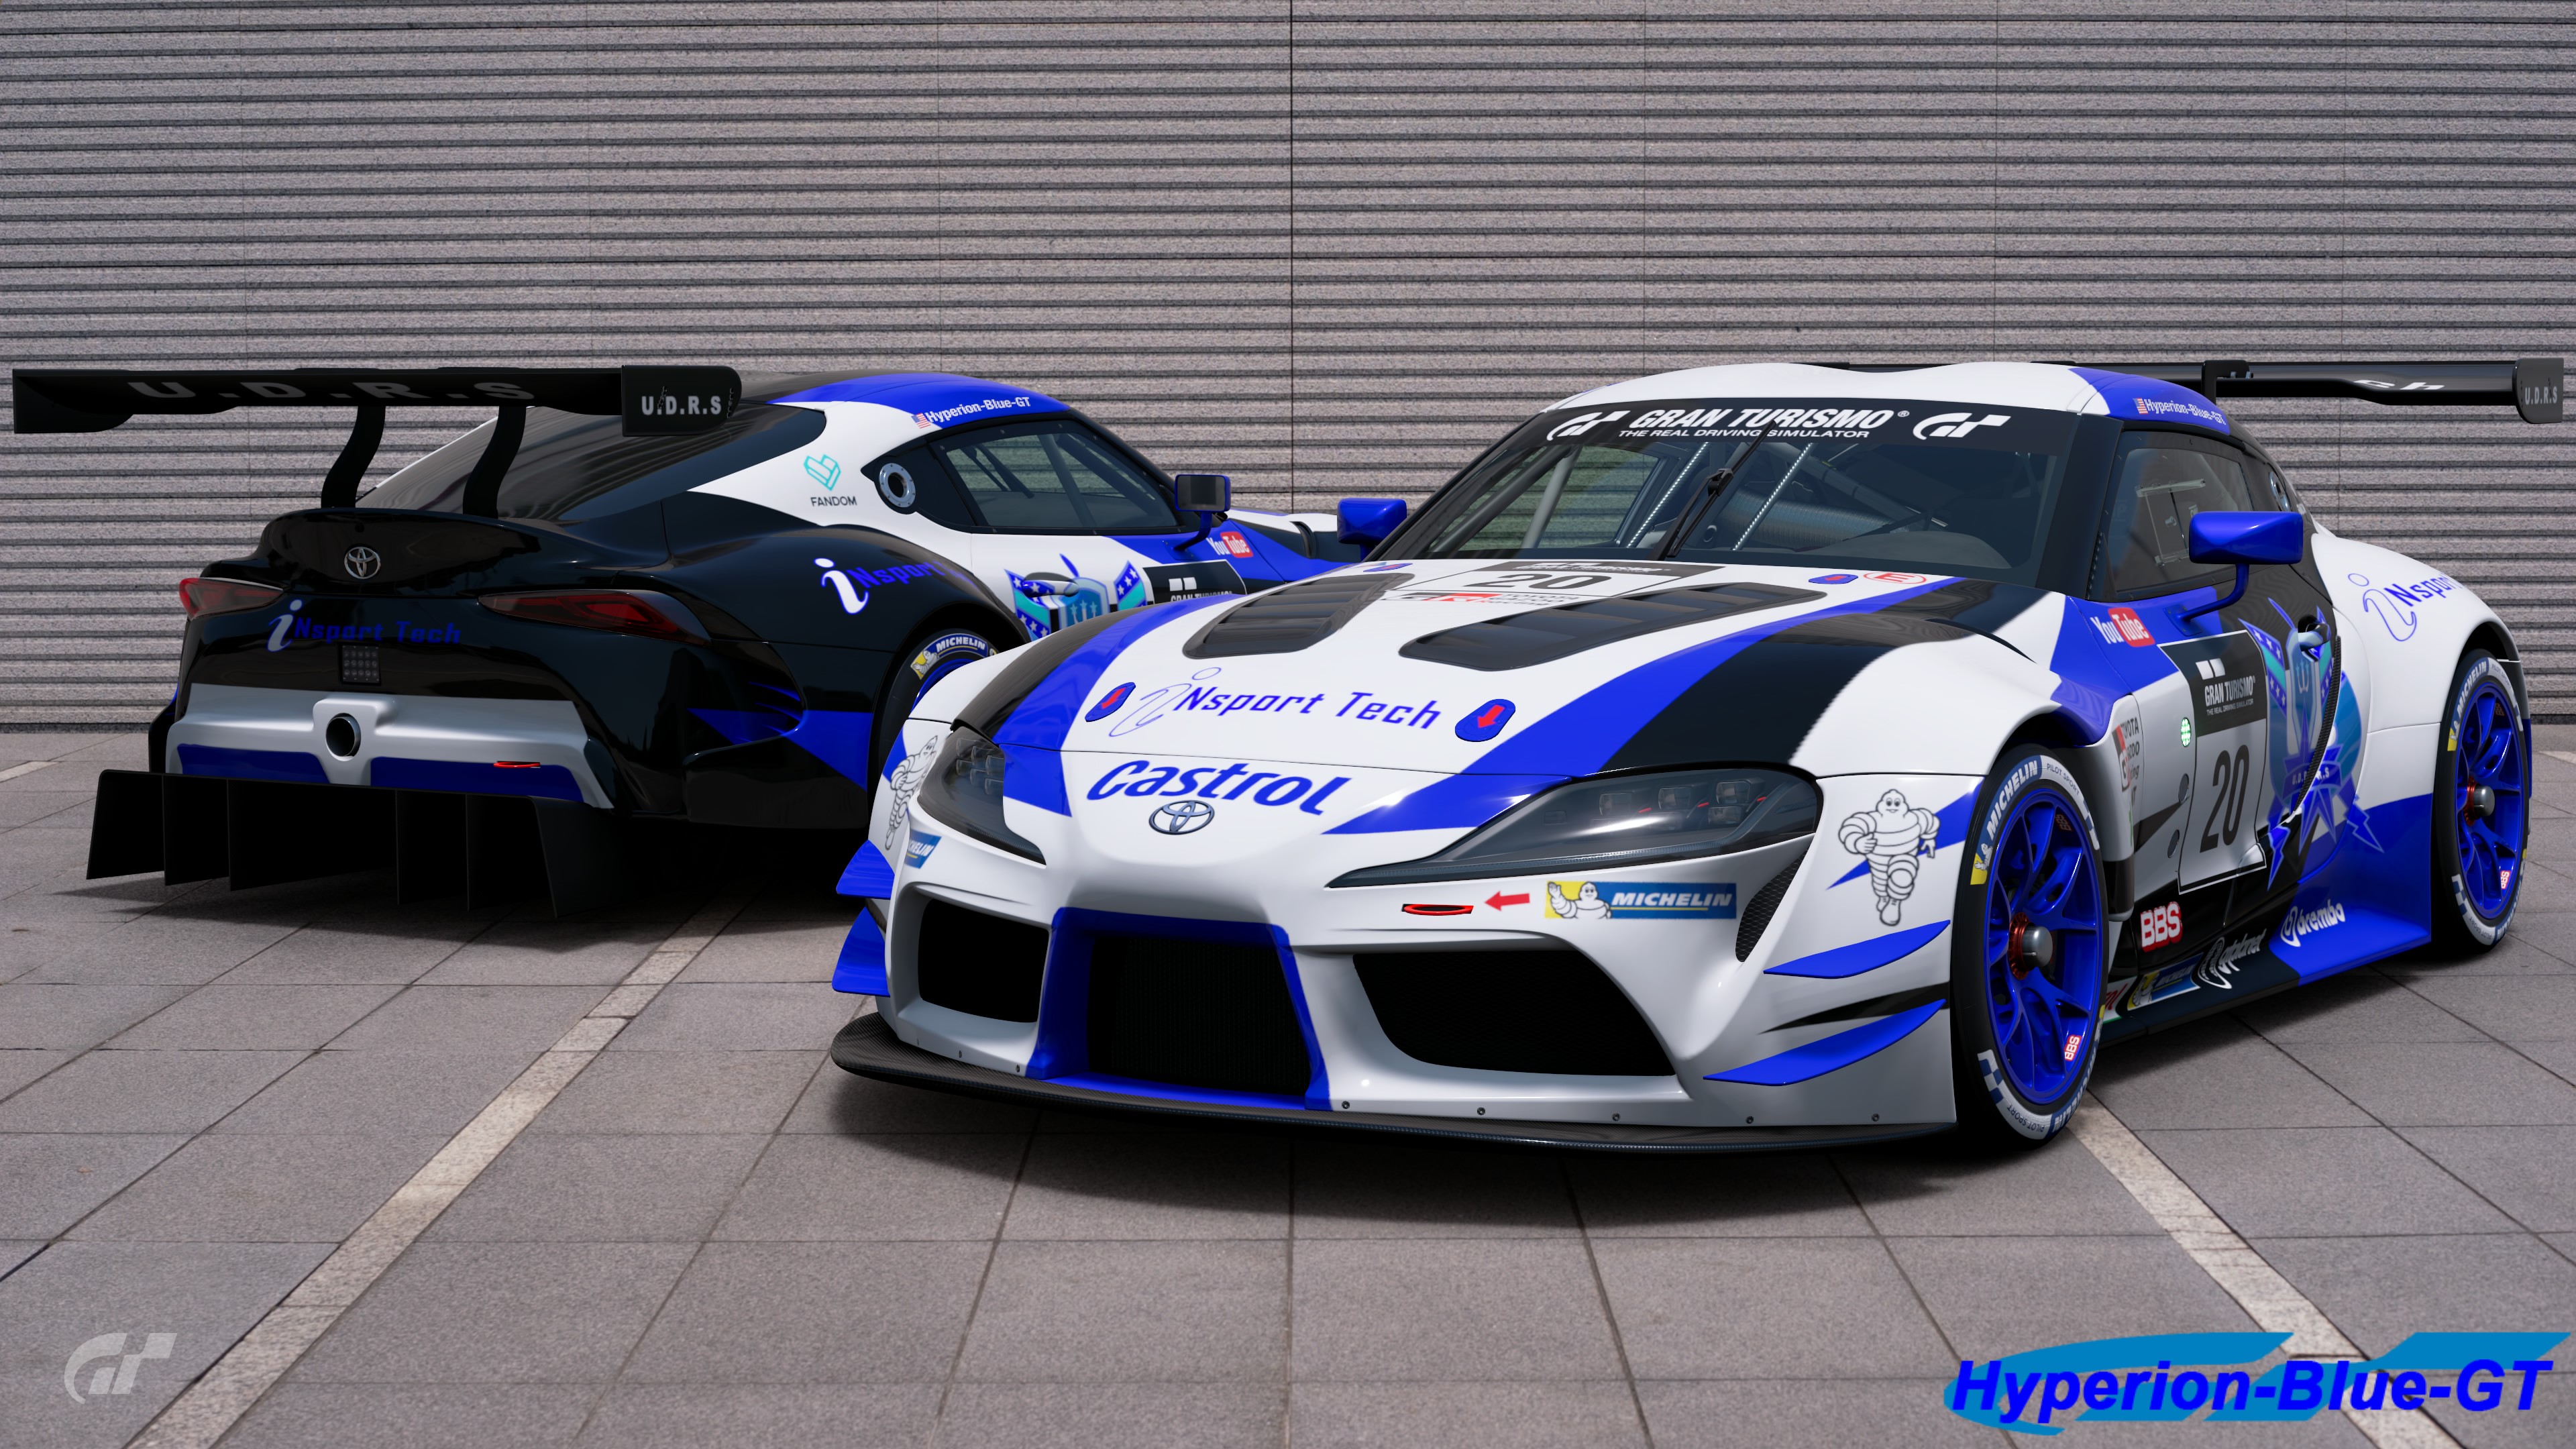 Drive Toyota's GR Supra Racing concept in “Gran Turismo Sport”